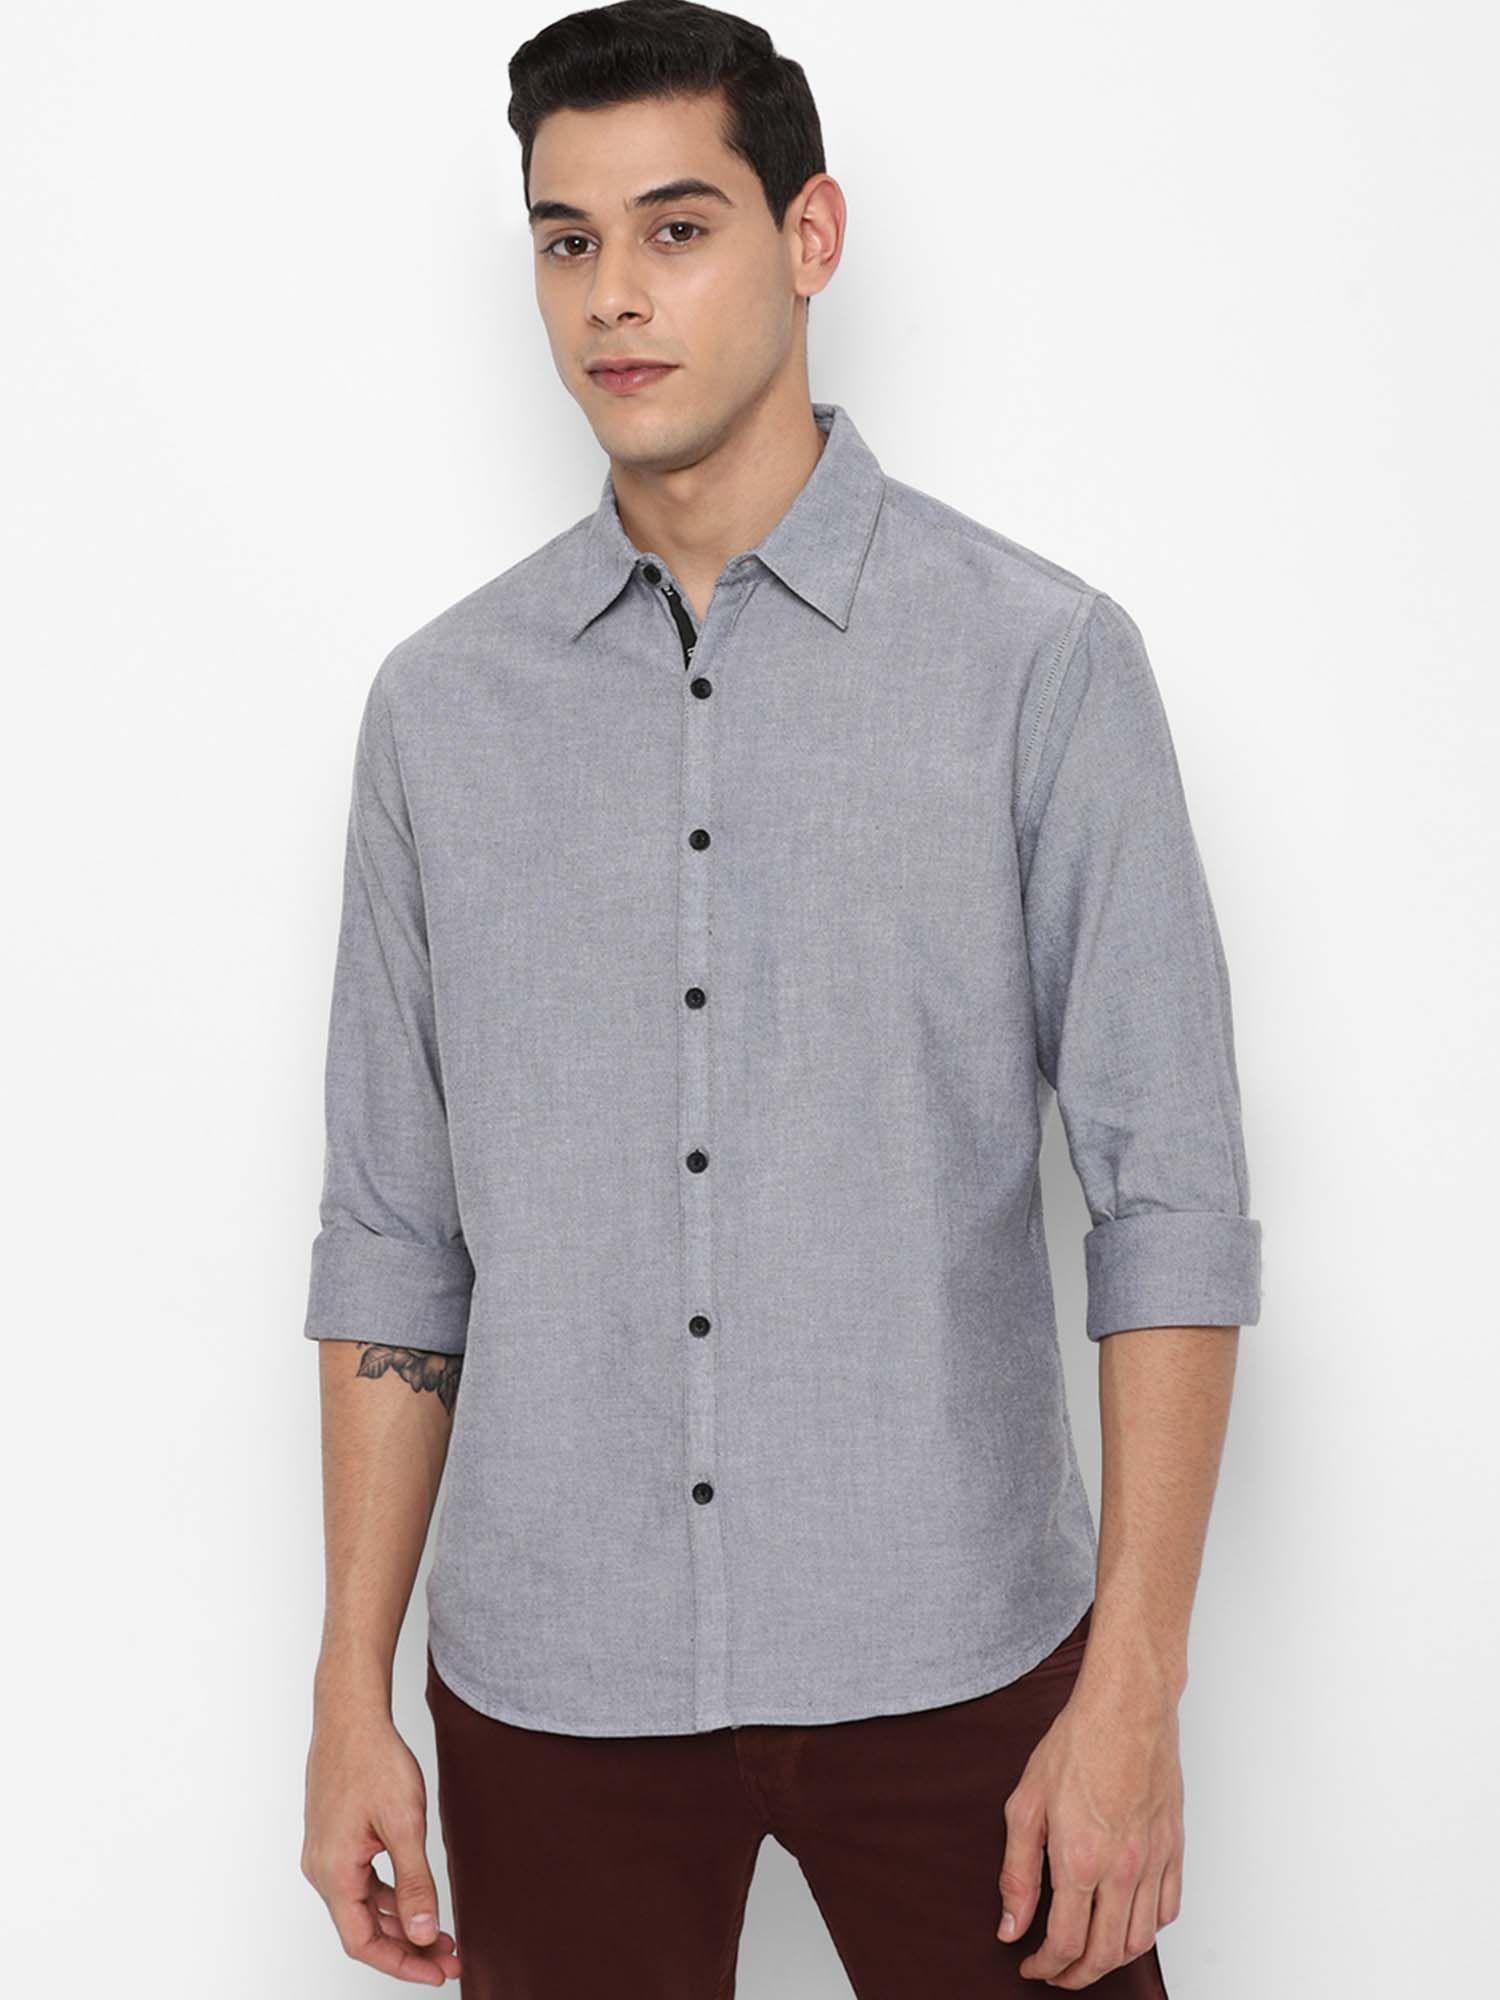 grey solid casual shirt